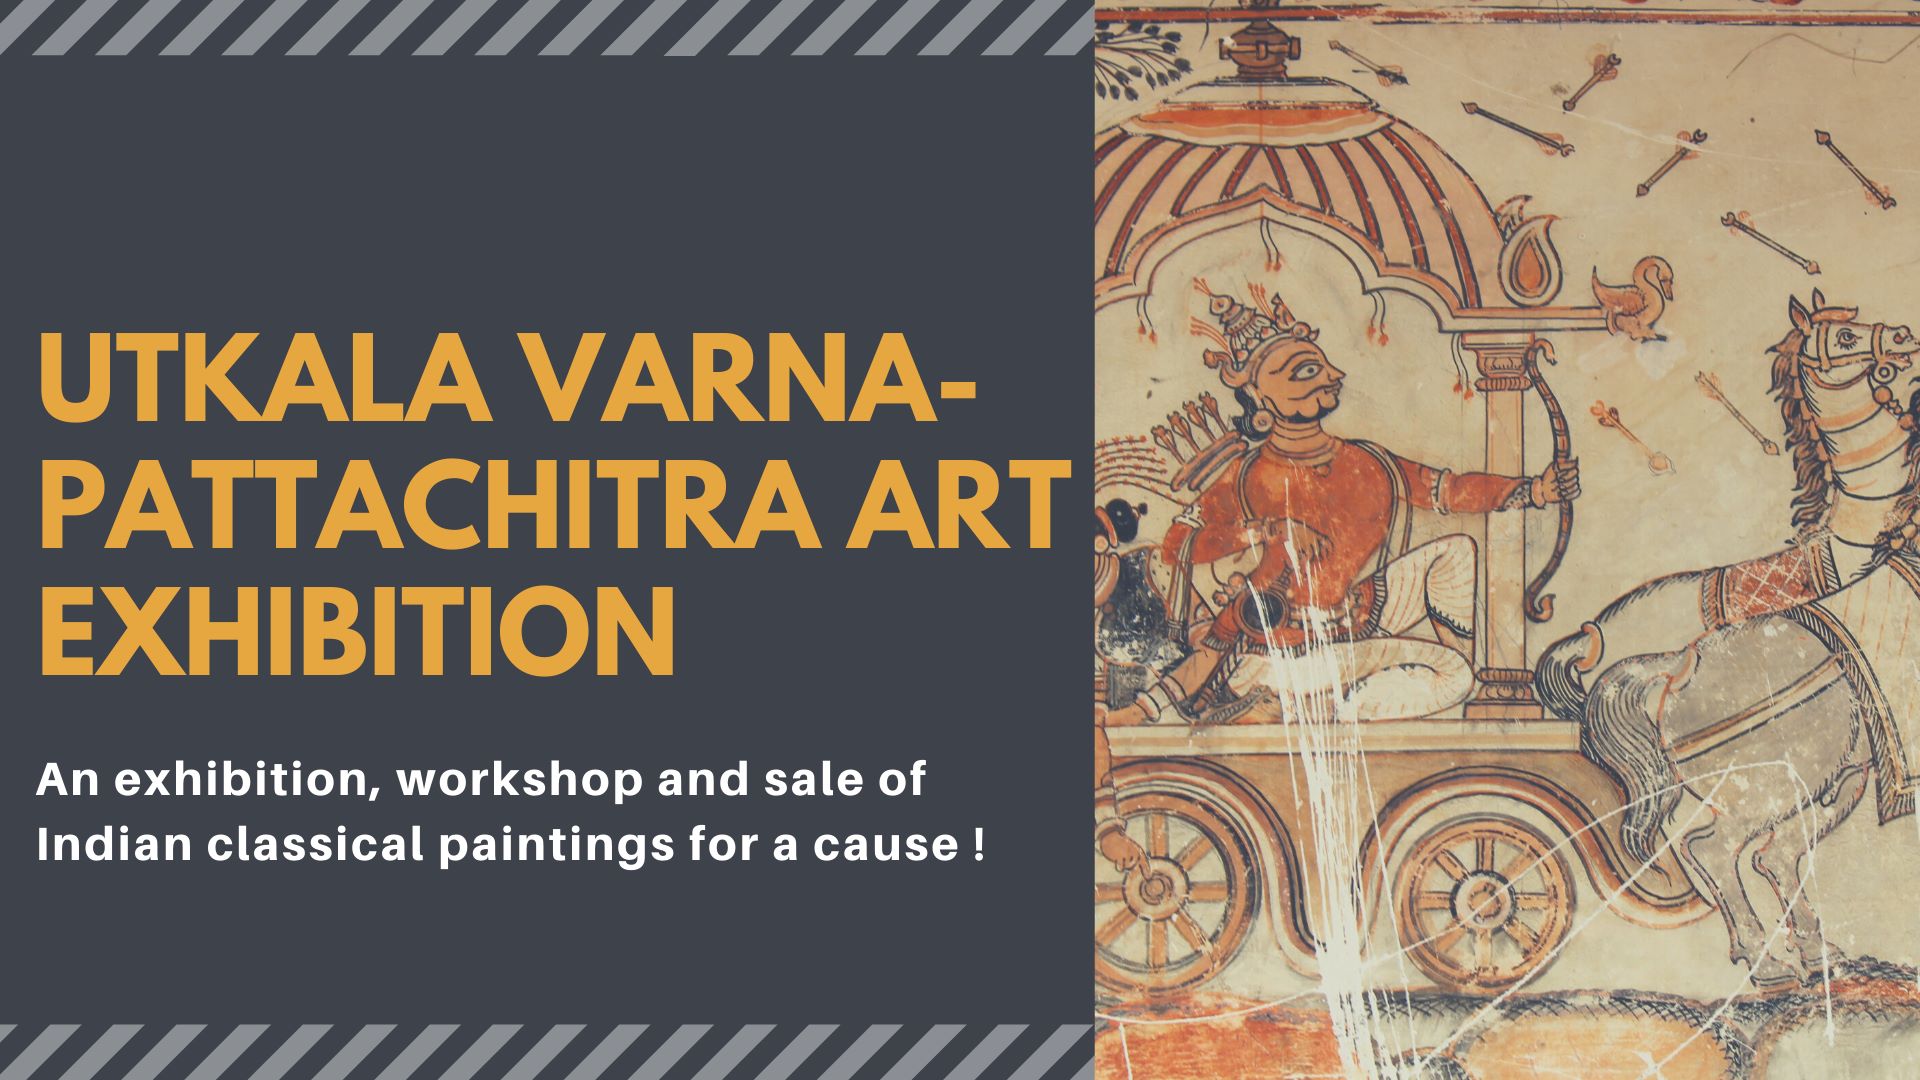 Utkala Varna - Exhibition and workshop of Pattachitra art